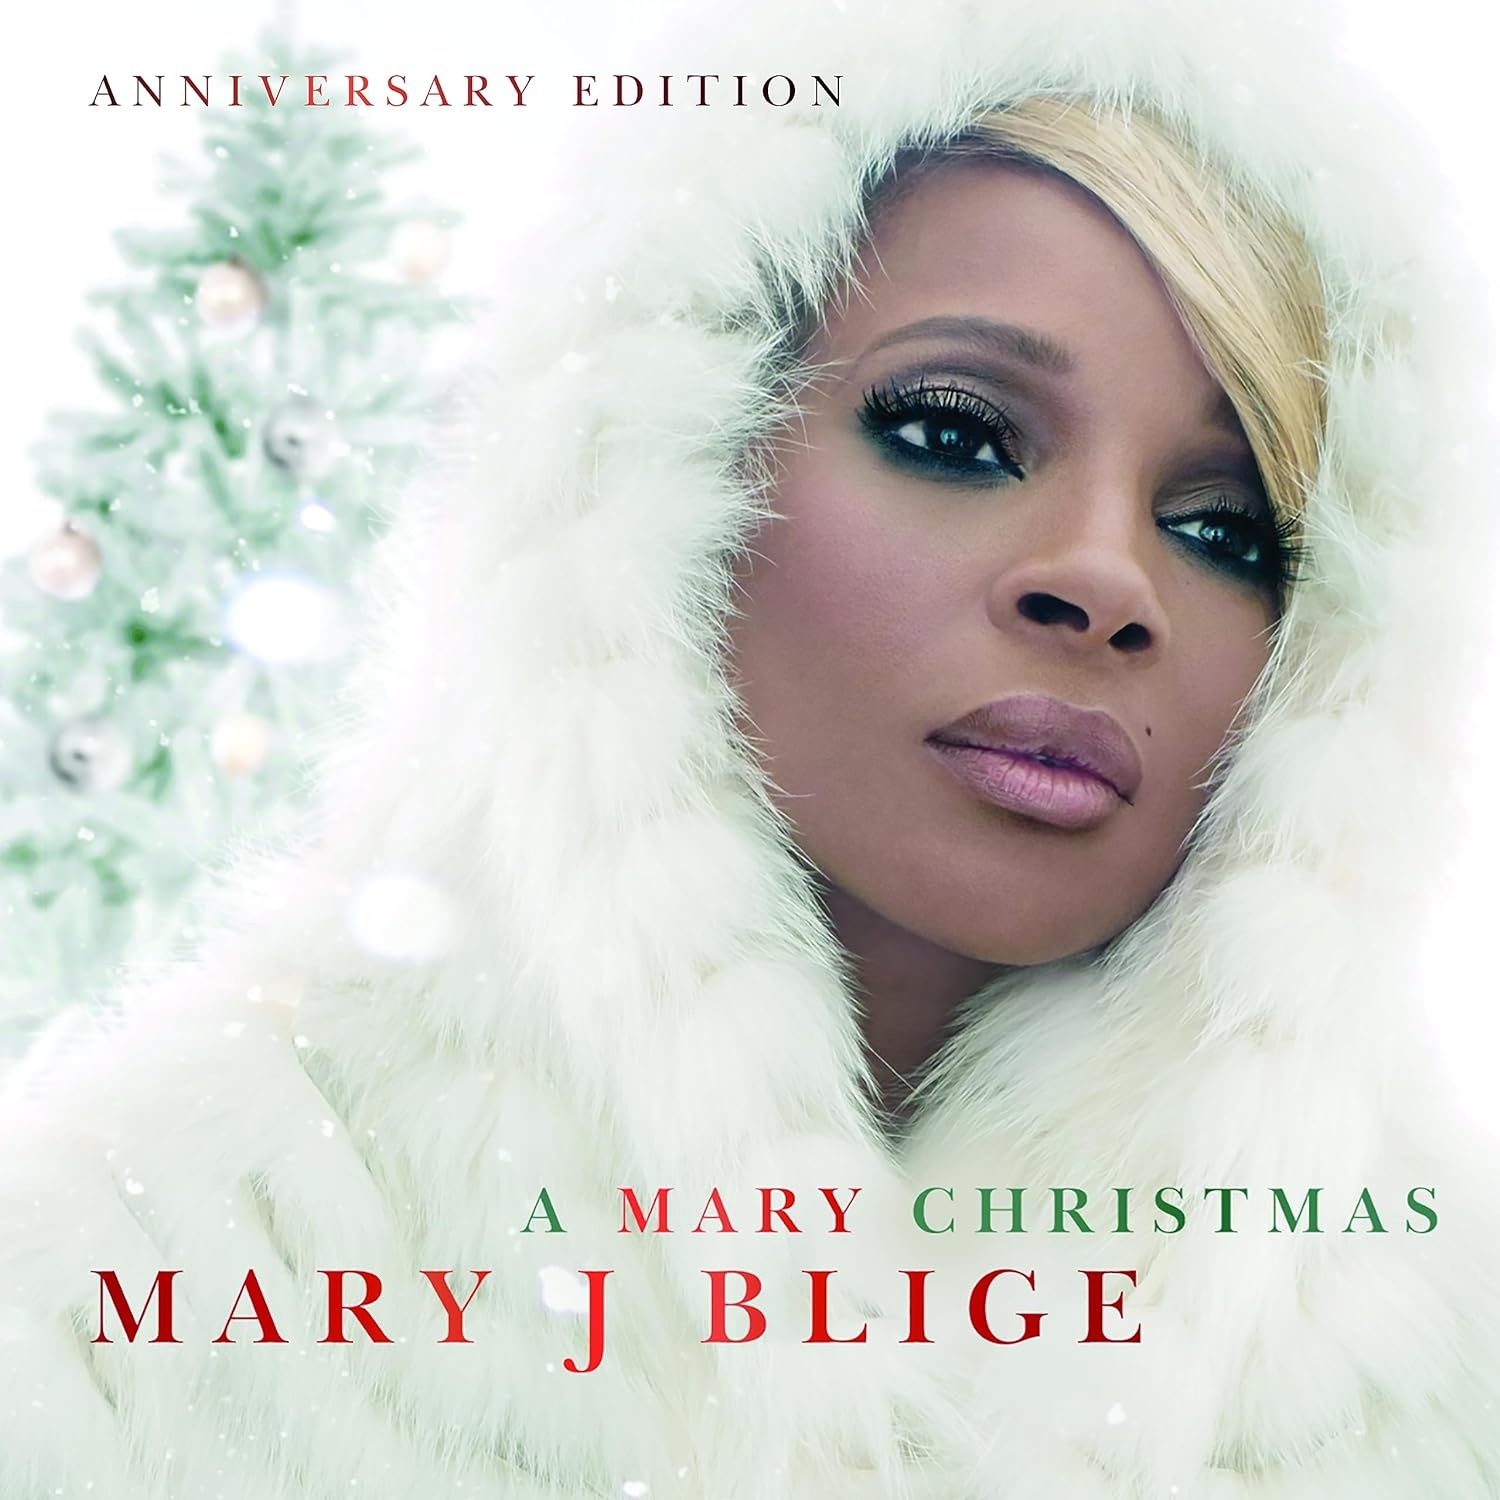 Mary J. Blige - A Mary Christmas vinyl cover